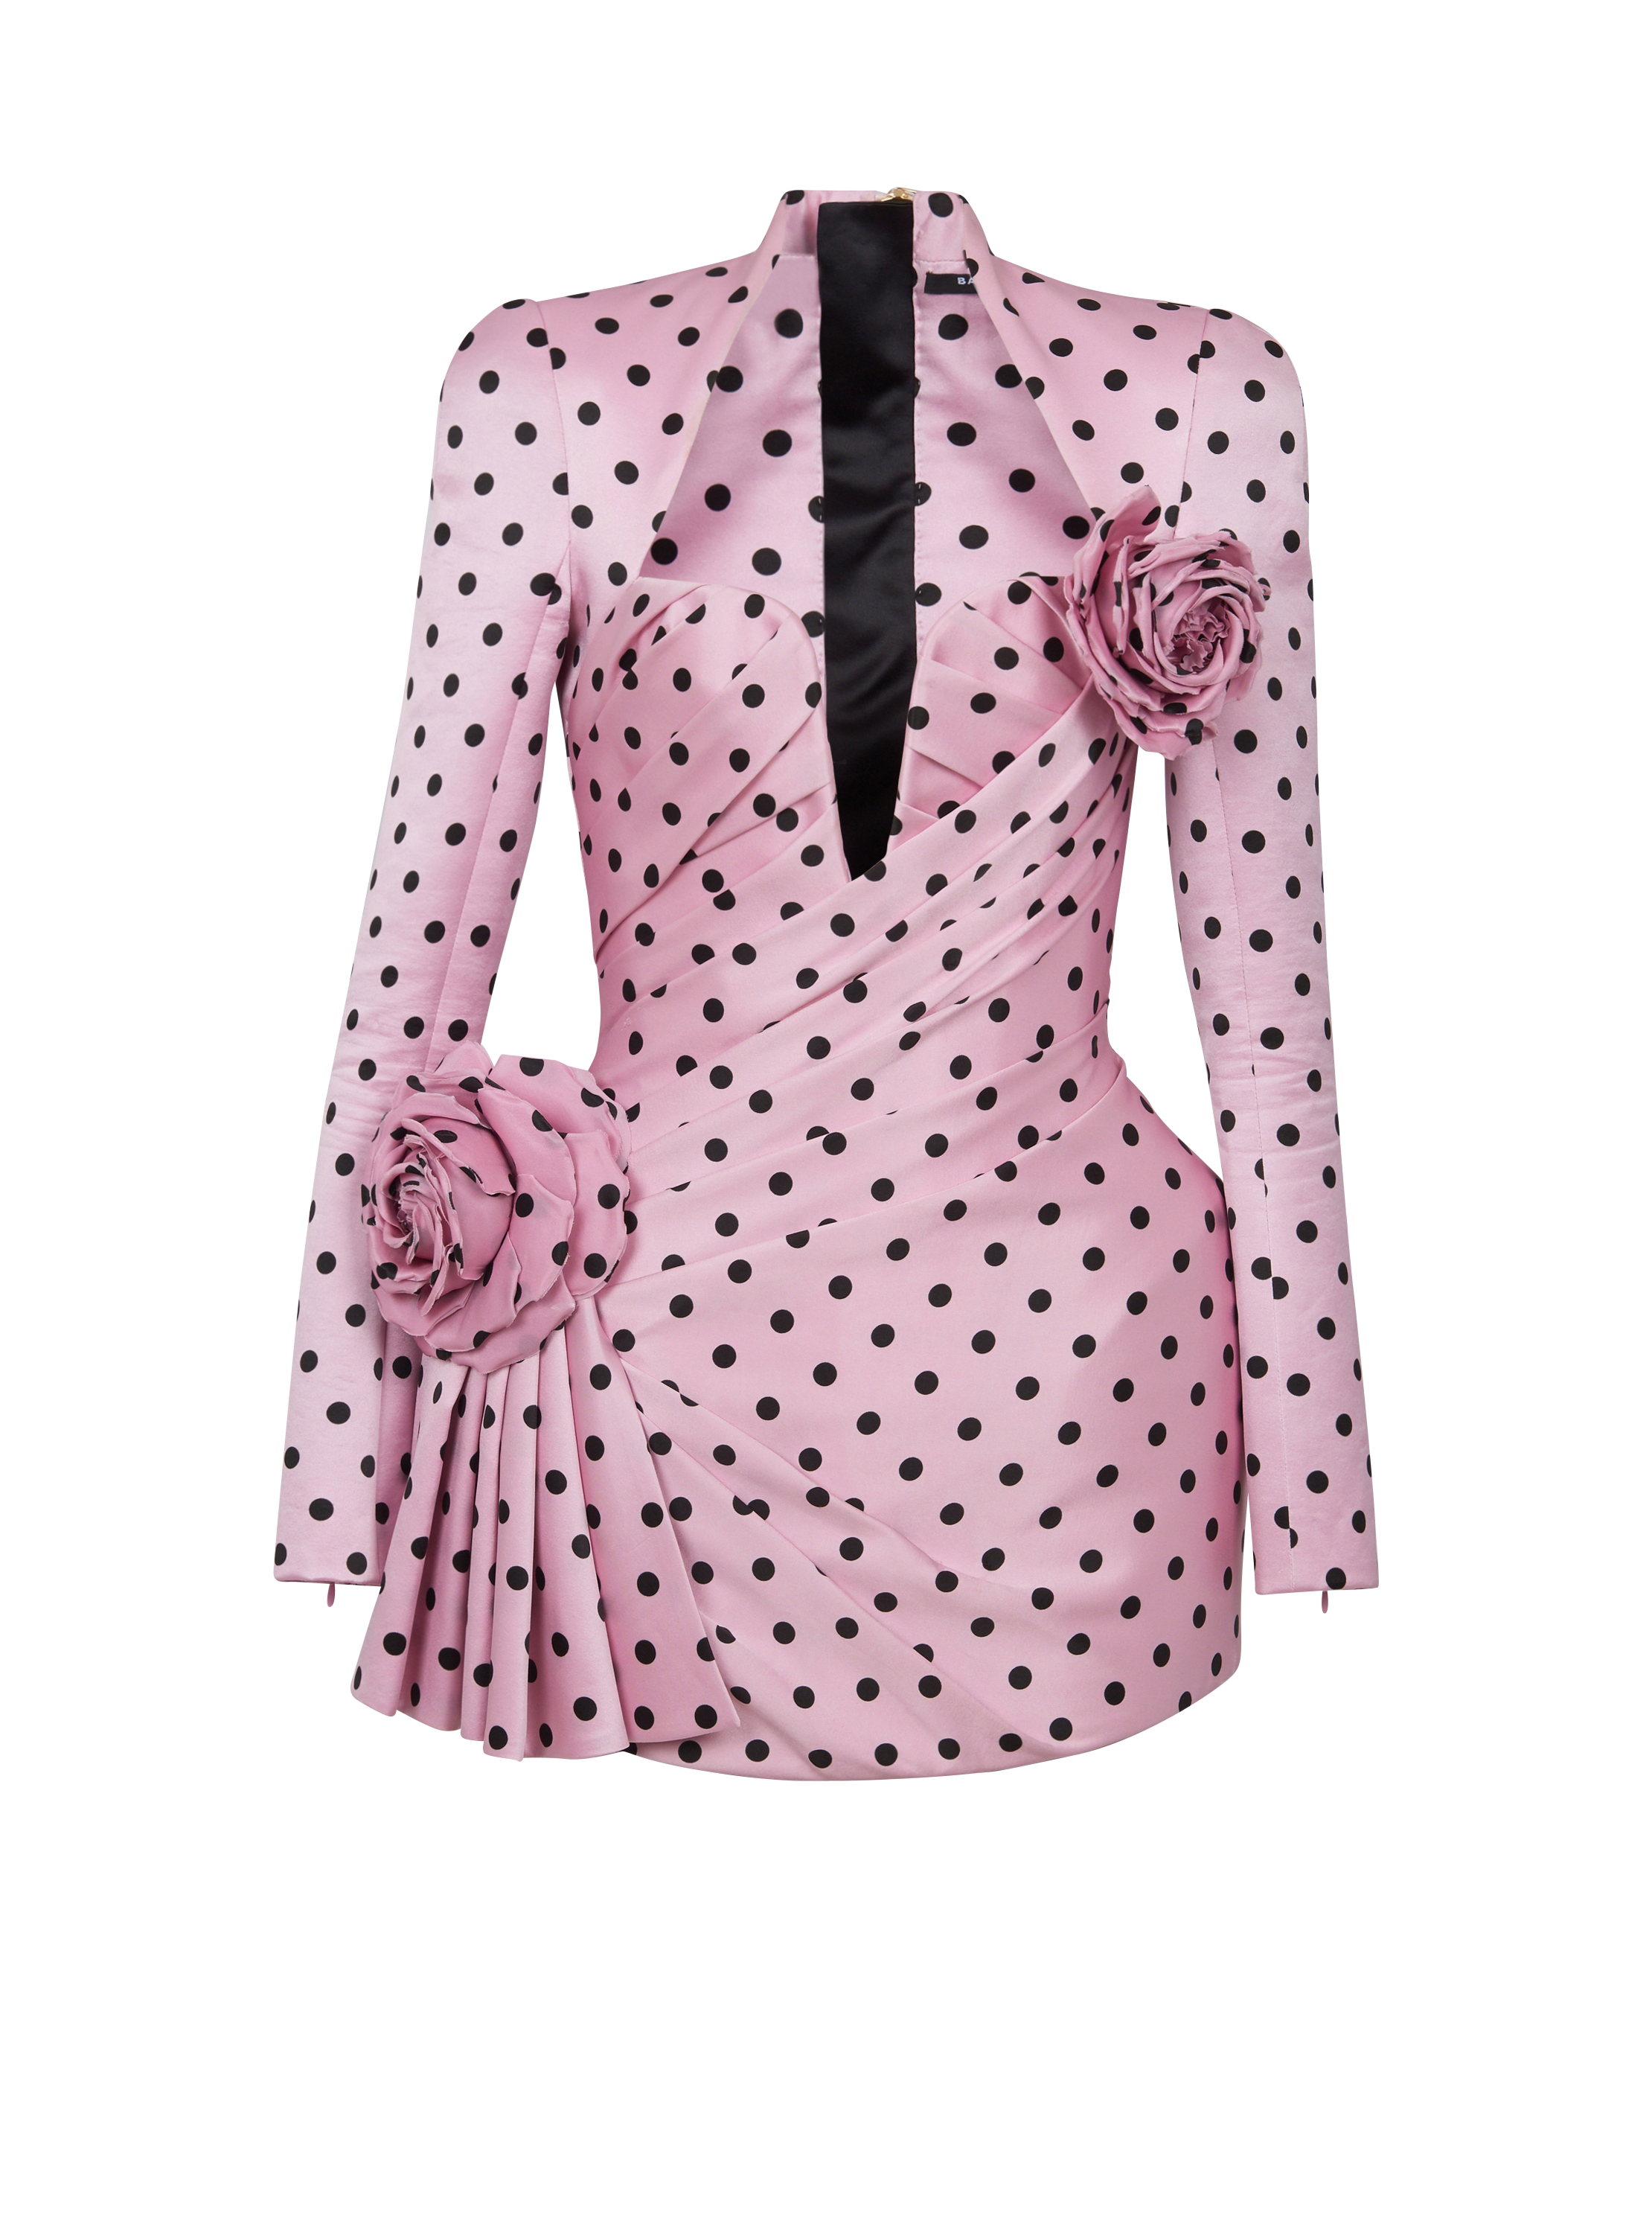 Kurzes Kleid mit Polka Dots-Print, rosa, hi-res